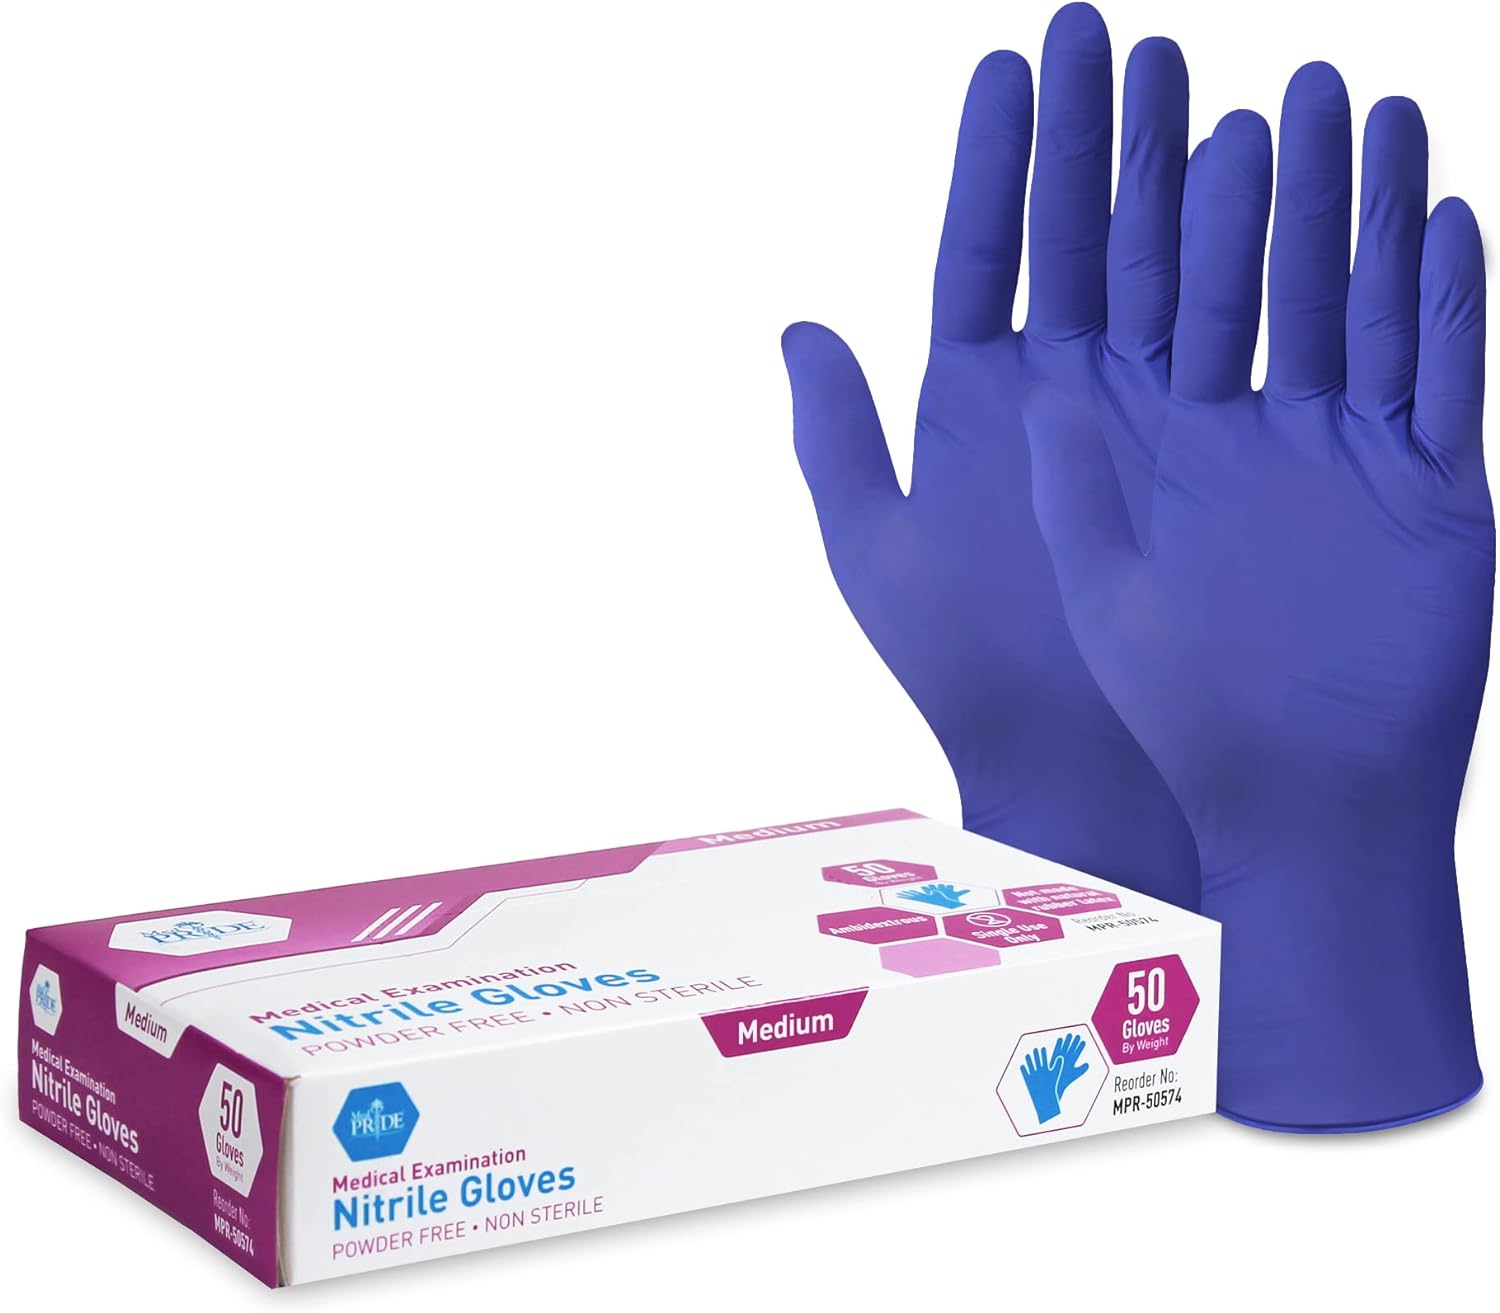 MED PRIDE Nitrile Medical Exam Gloves - Disposable Powder & Latex-Free Surgical Gloves For Doctors Nurses Hospital & Home Use